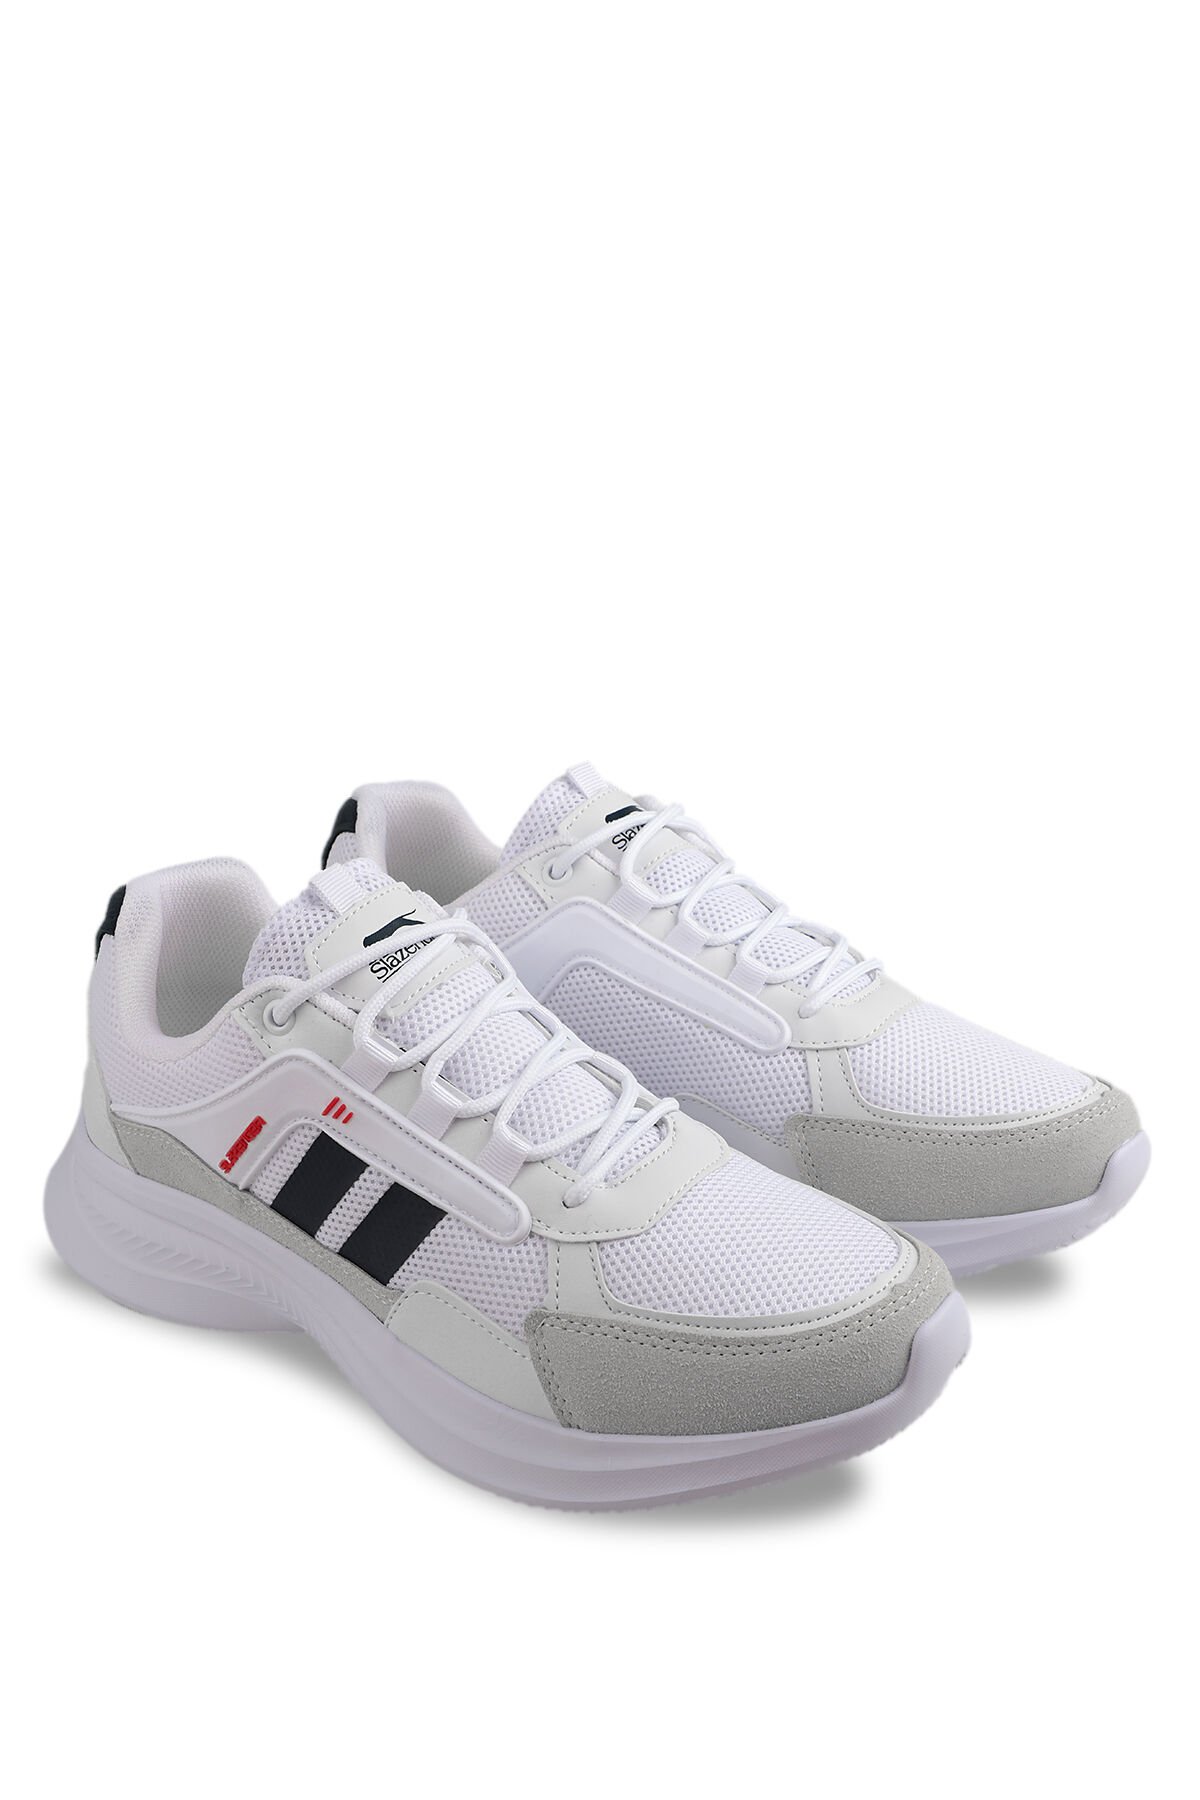 ZODYAK I Sneaker Erkek Ayakkabı Beyaz / Lacivert - Thumbnail